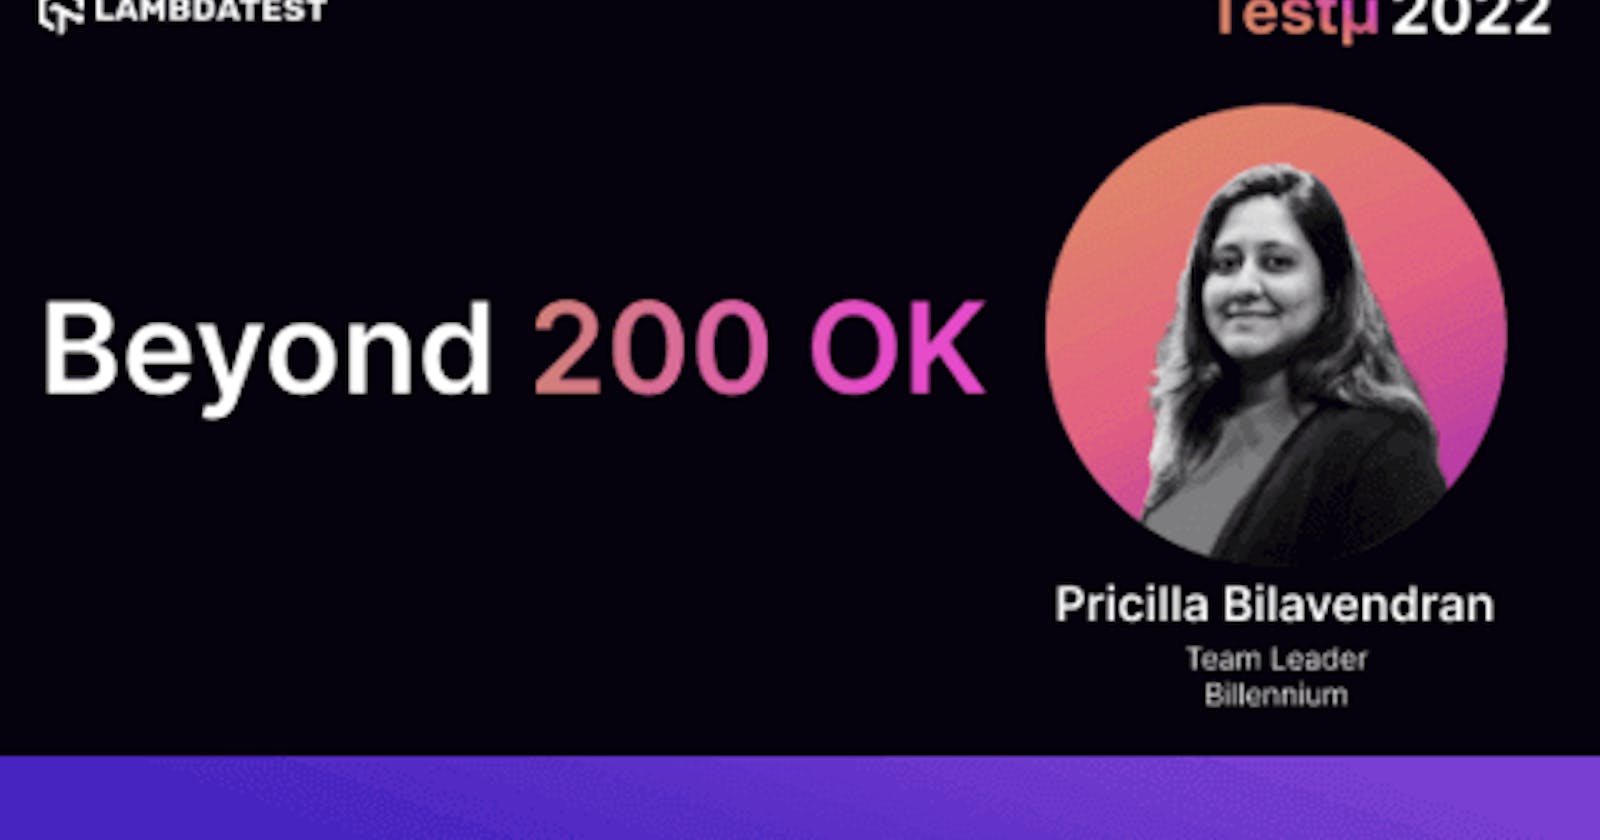 Beyond 200 OK: Pricilla Bilavendran [Testμ 2022]